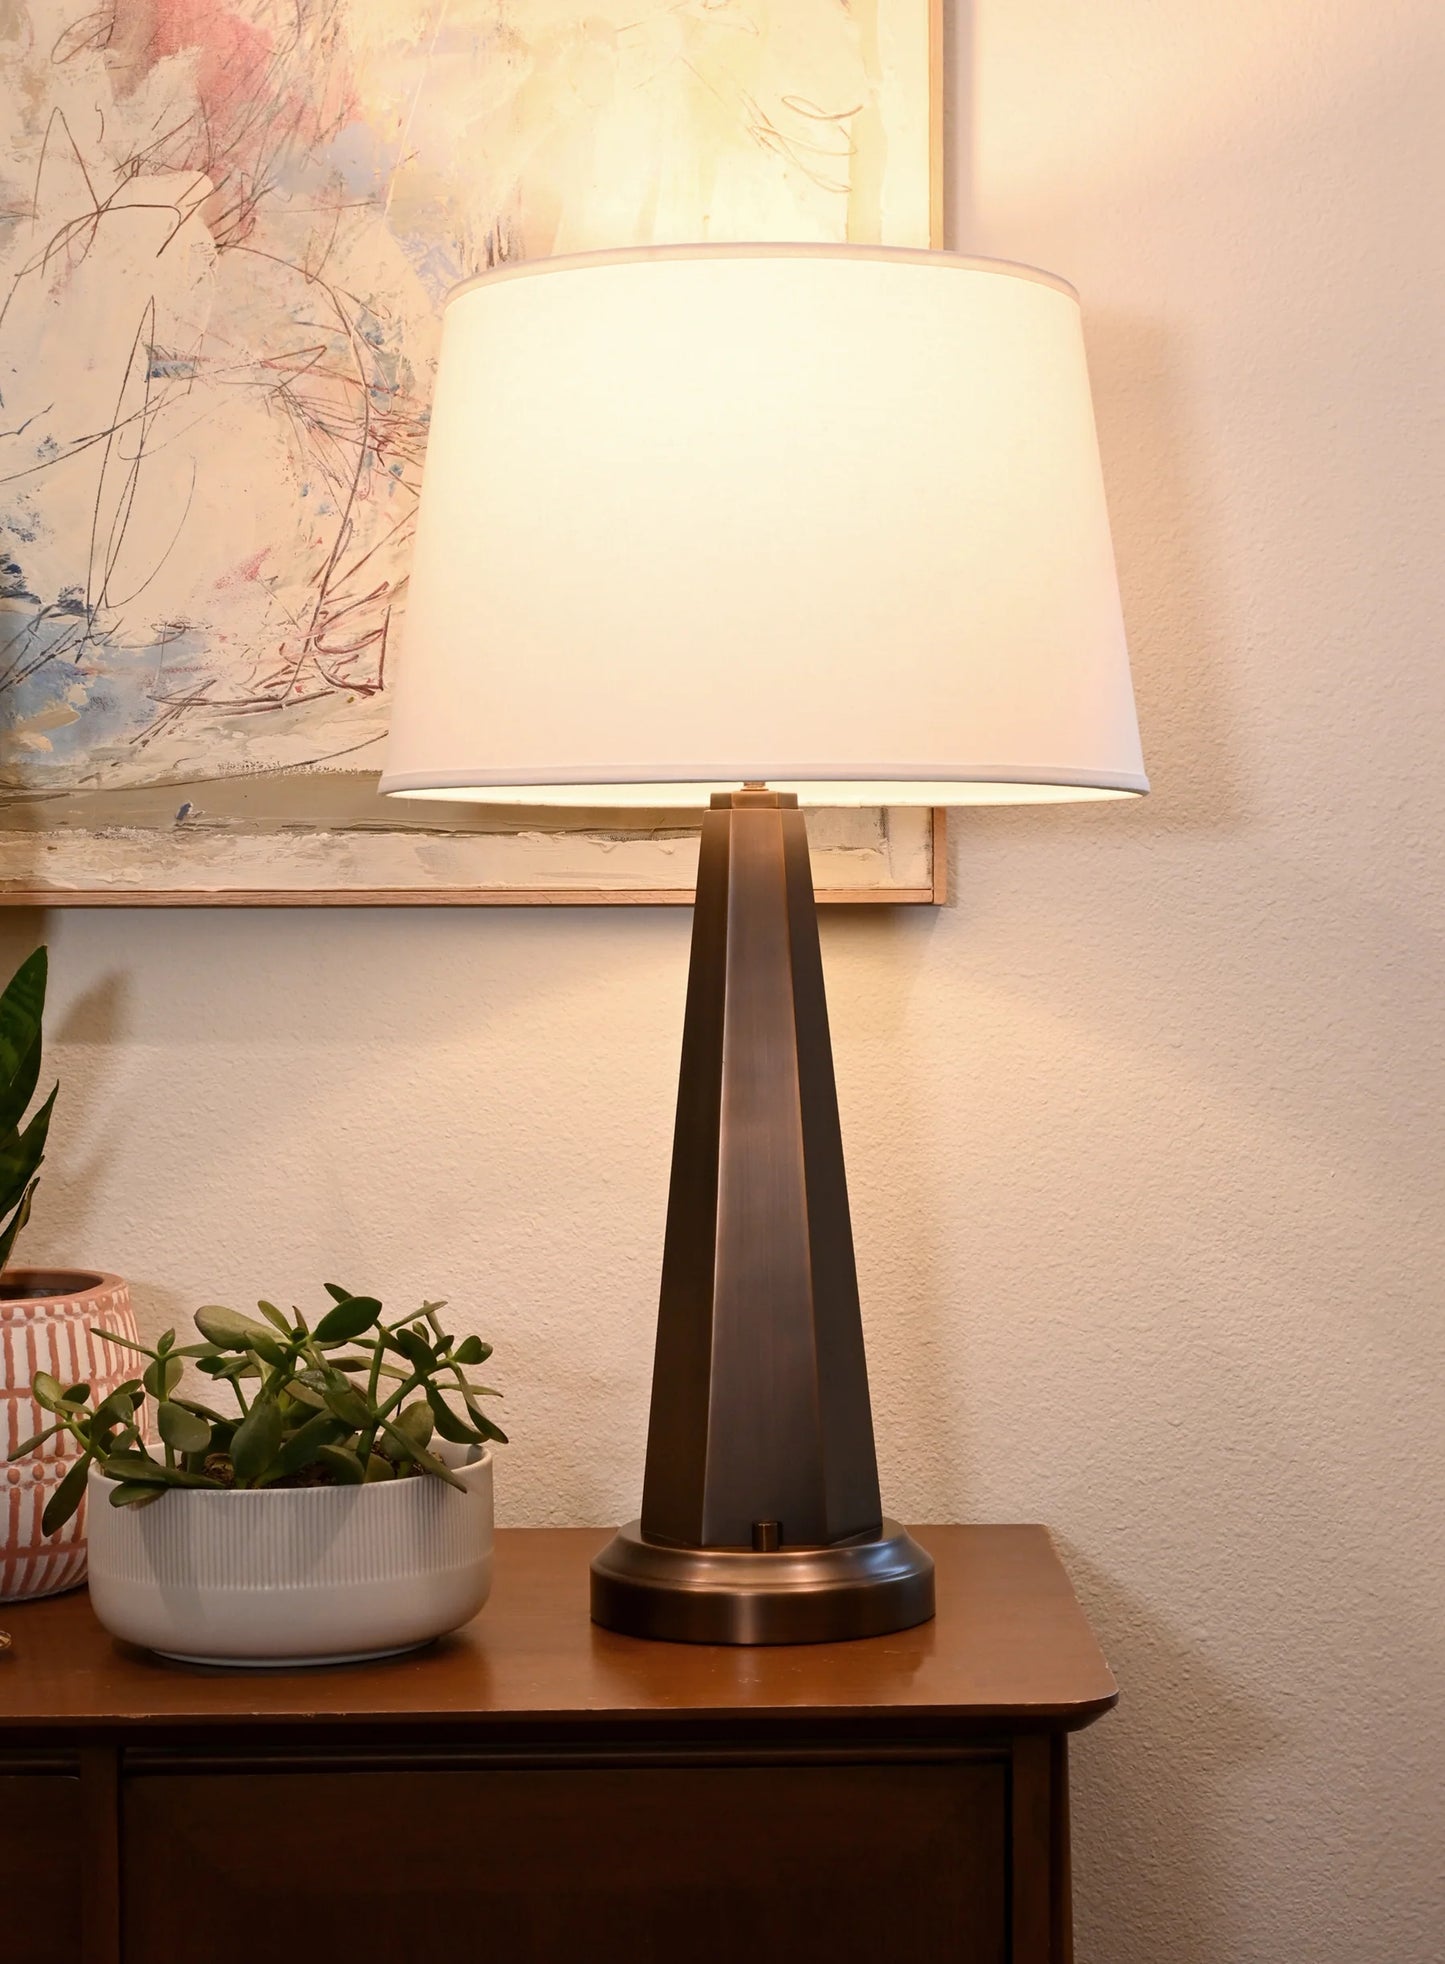 Stylish Home Decor Lighting - Hotels and Restaurants Portable Lamp